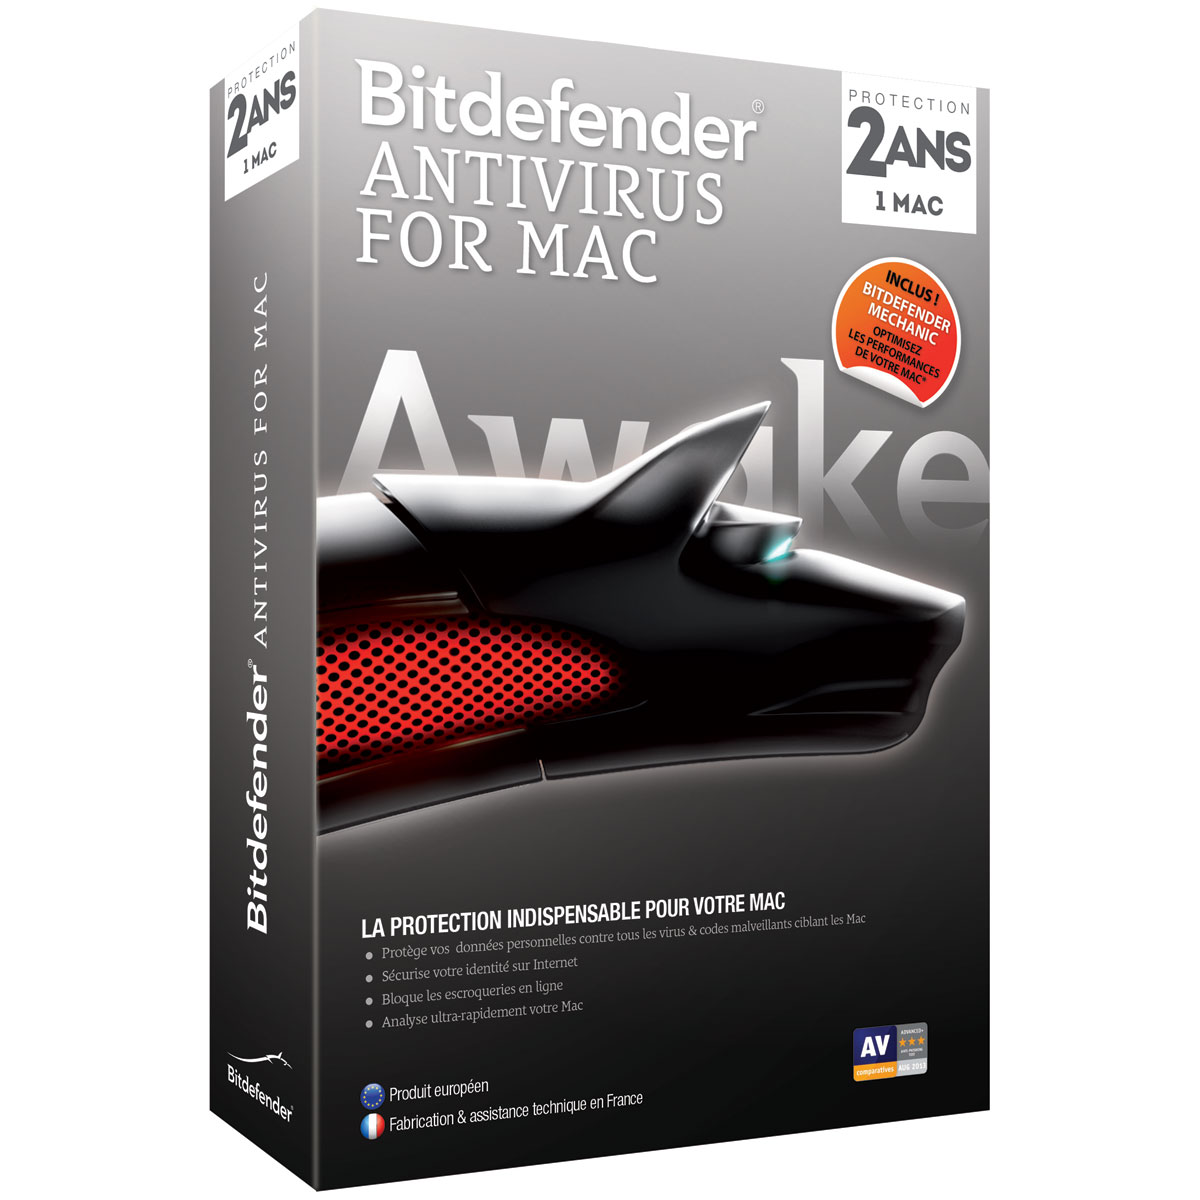 bitdefender antivirus for mac 10.6.8